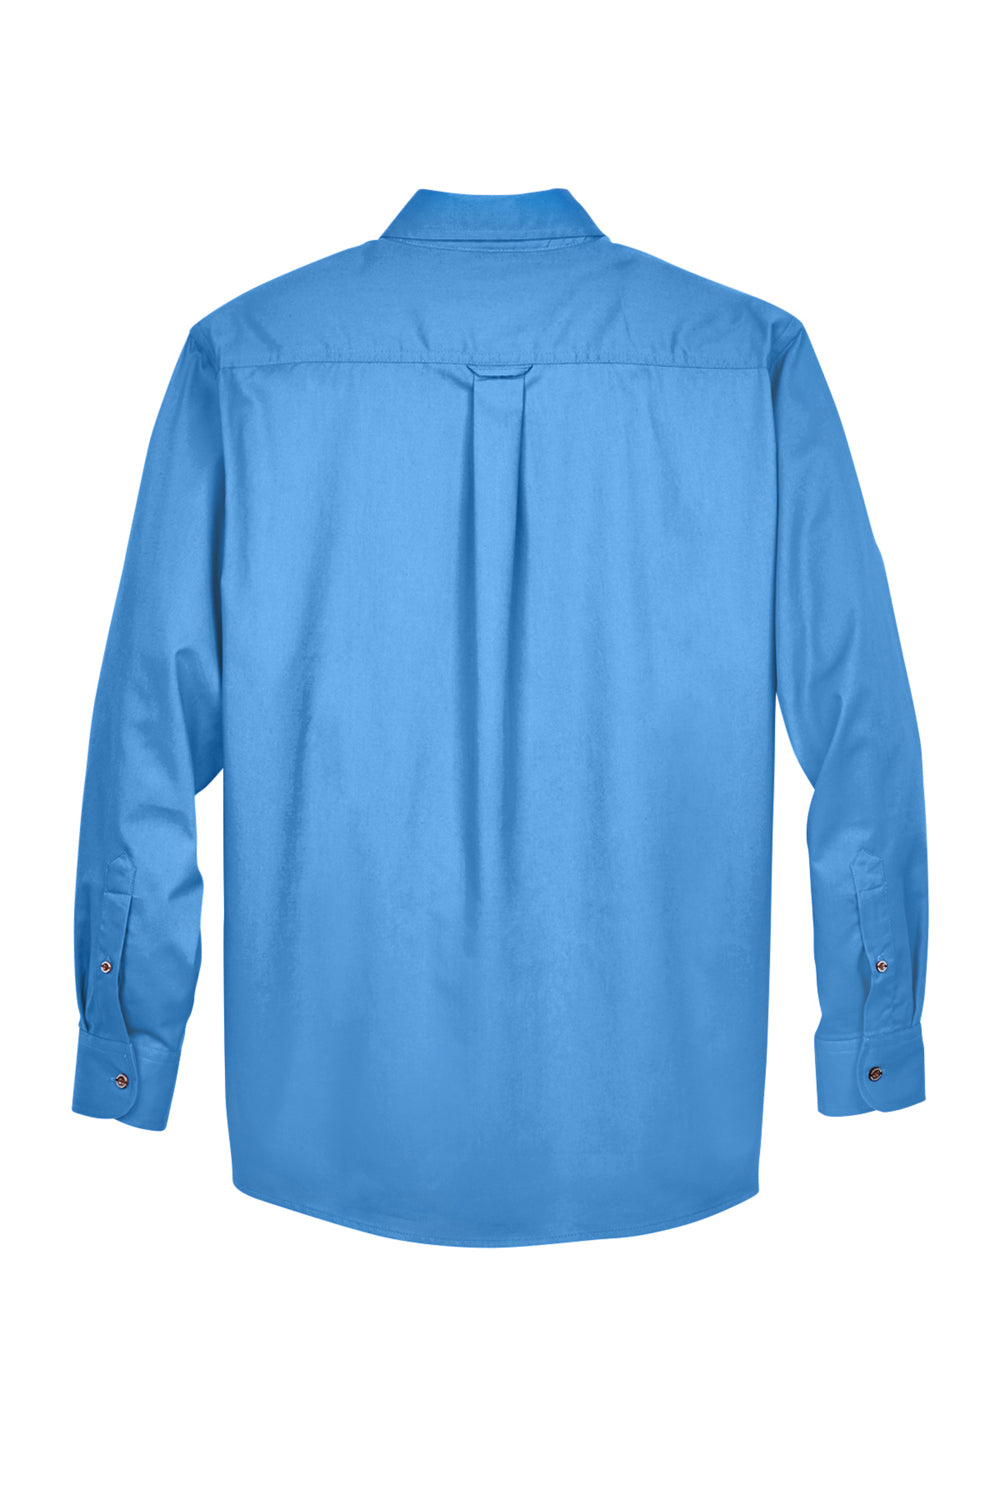 Harriton M500/M500T Wrinkle Resistant Long Sleeve Button Down Shirt w/ Pocket Nautical Blue Flat Back